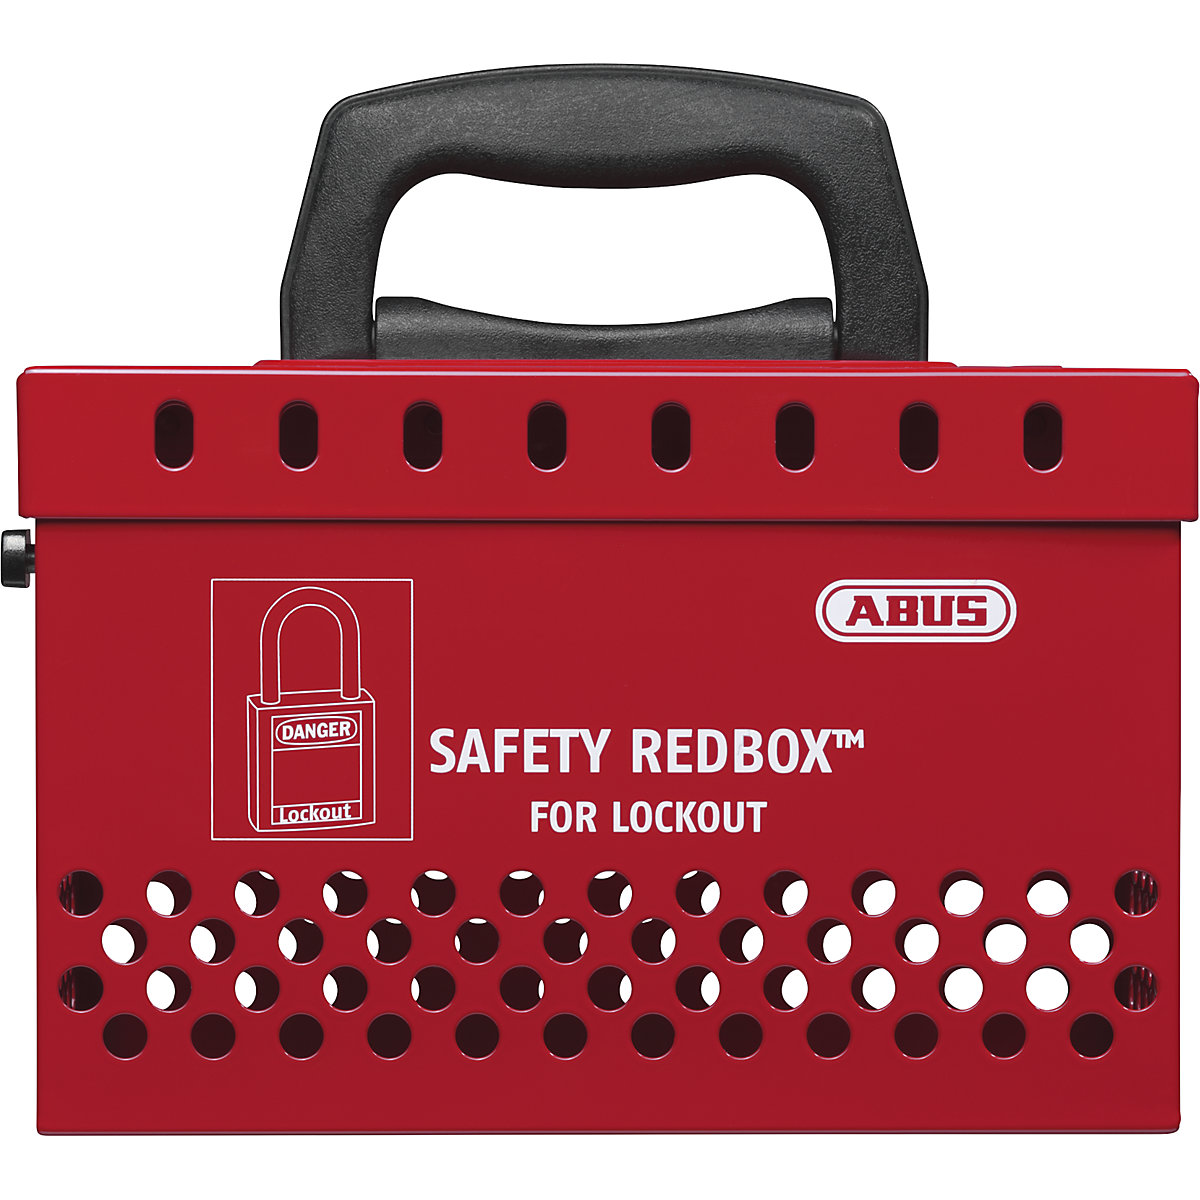 Safety Redbox B835 - ABUS